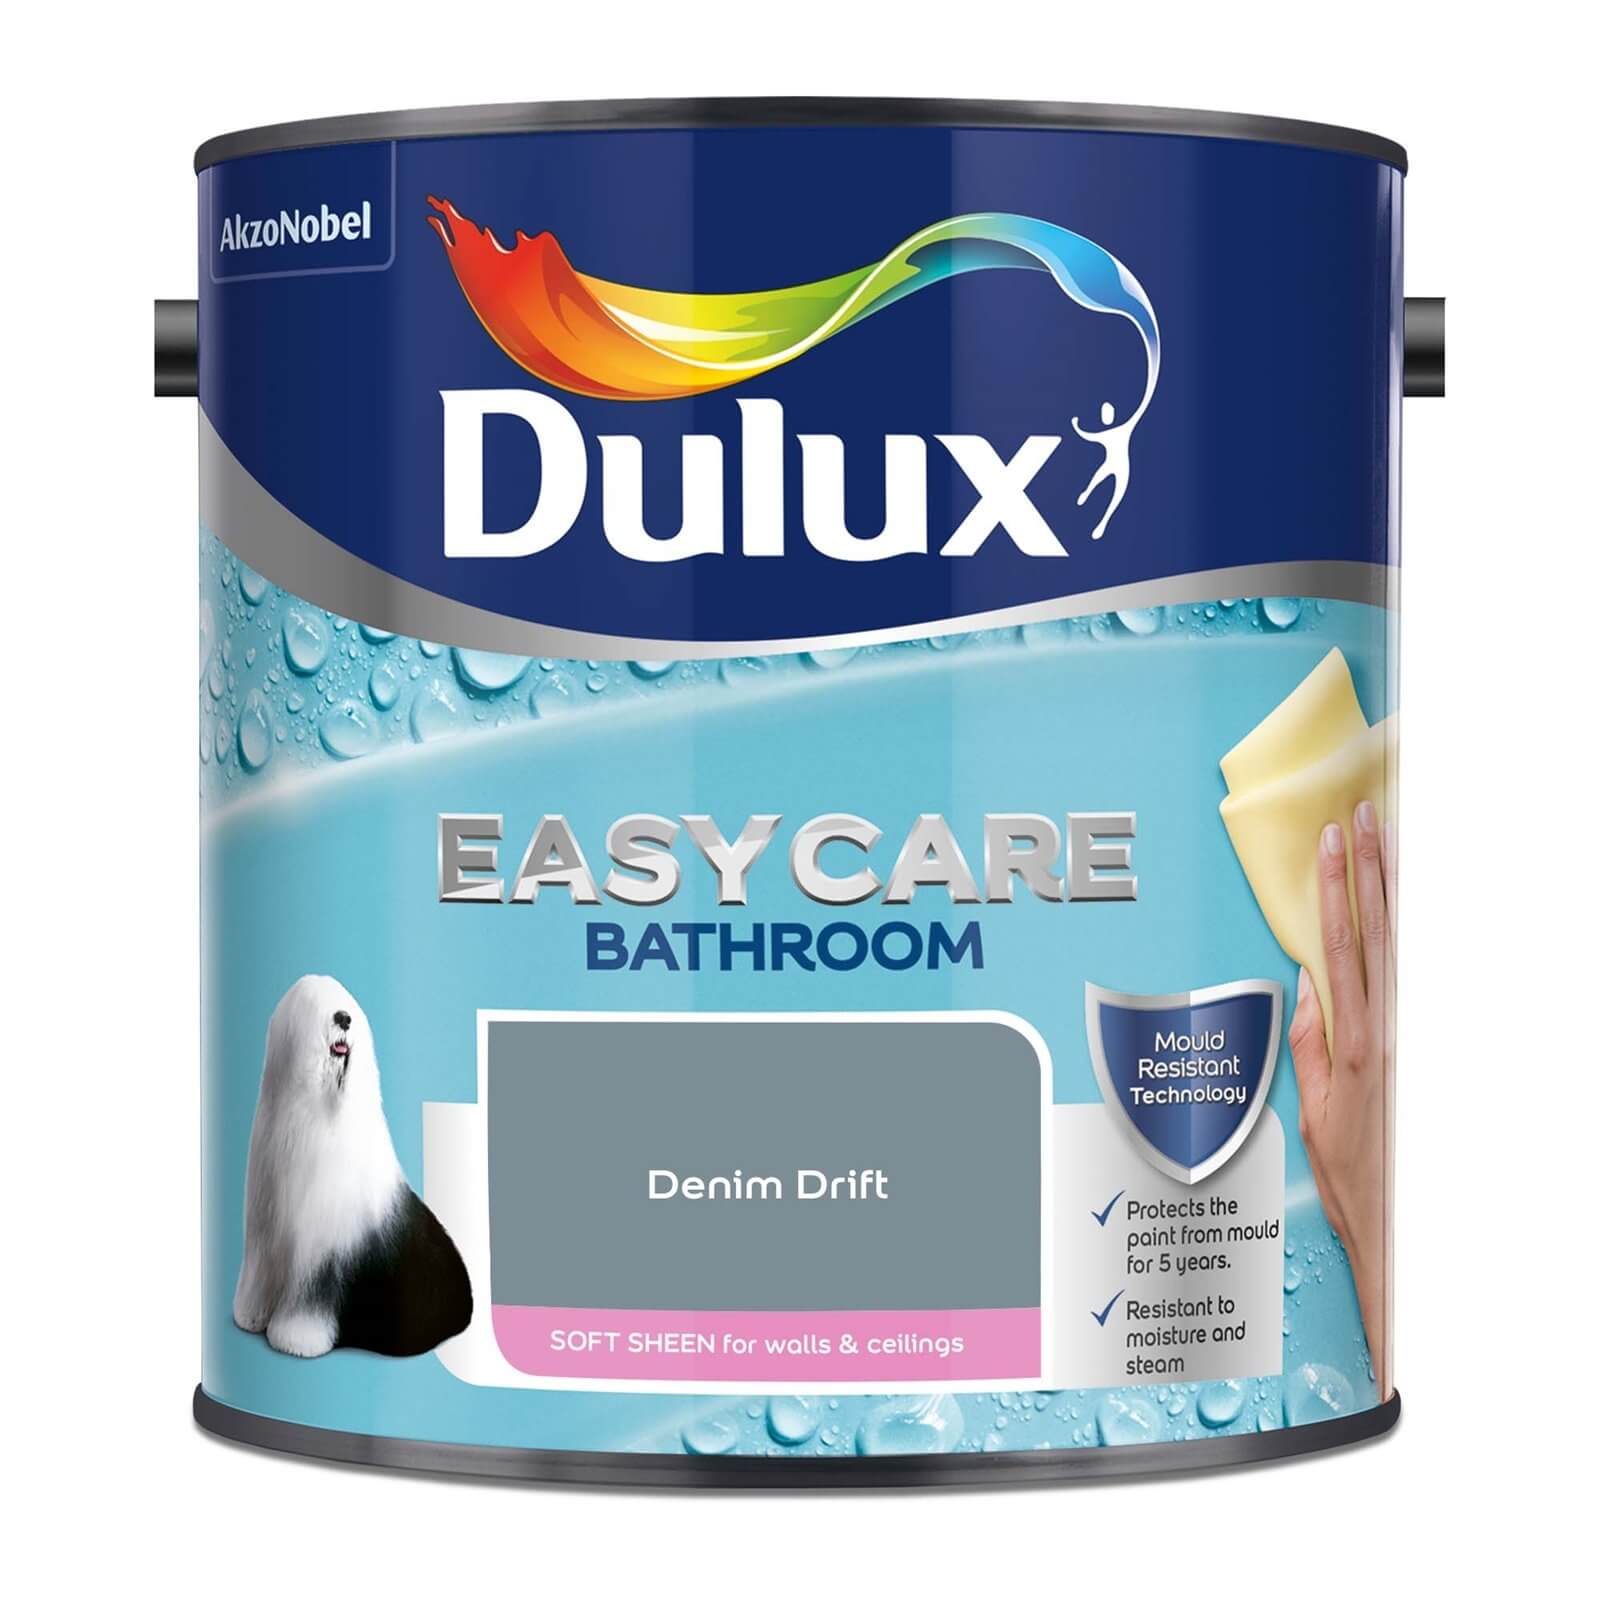 Dulux Easycare Bathroom Denim Drift Soft Sheen Paint - 2.5L